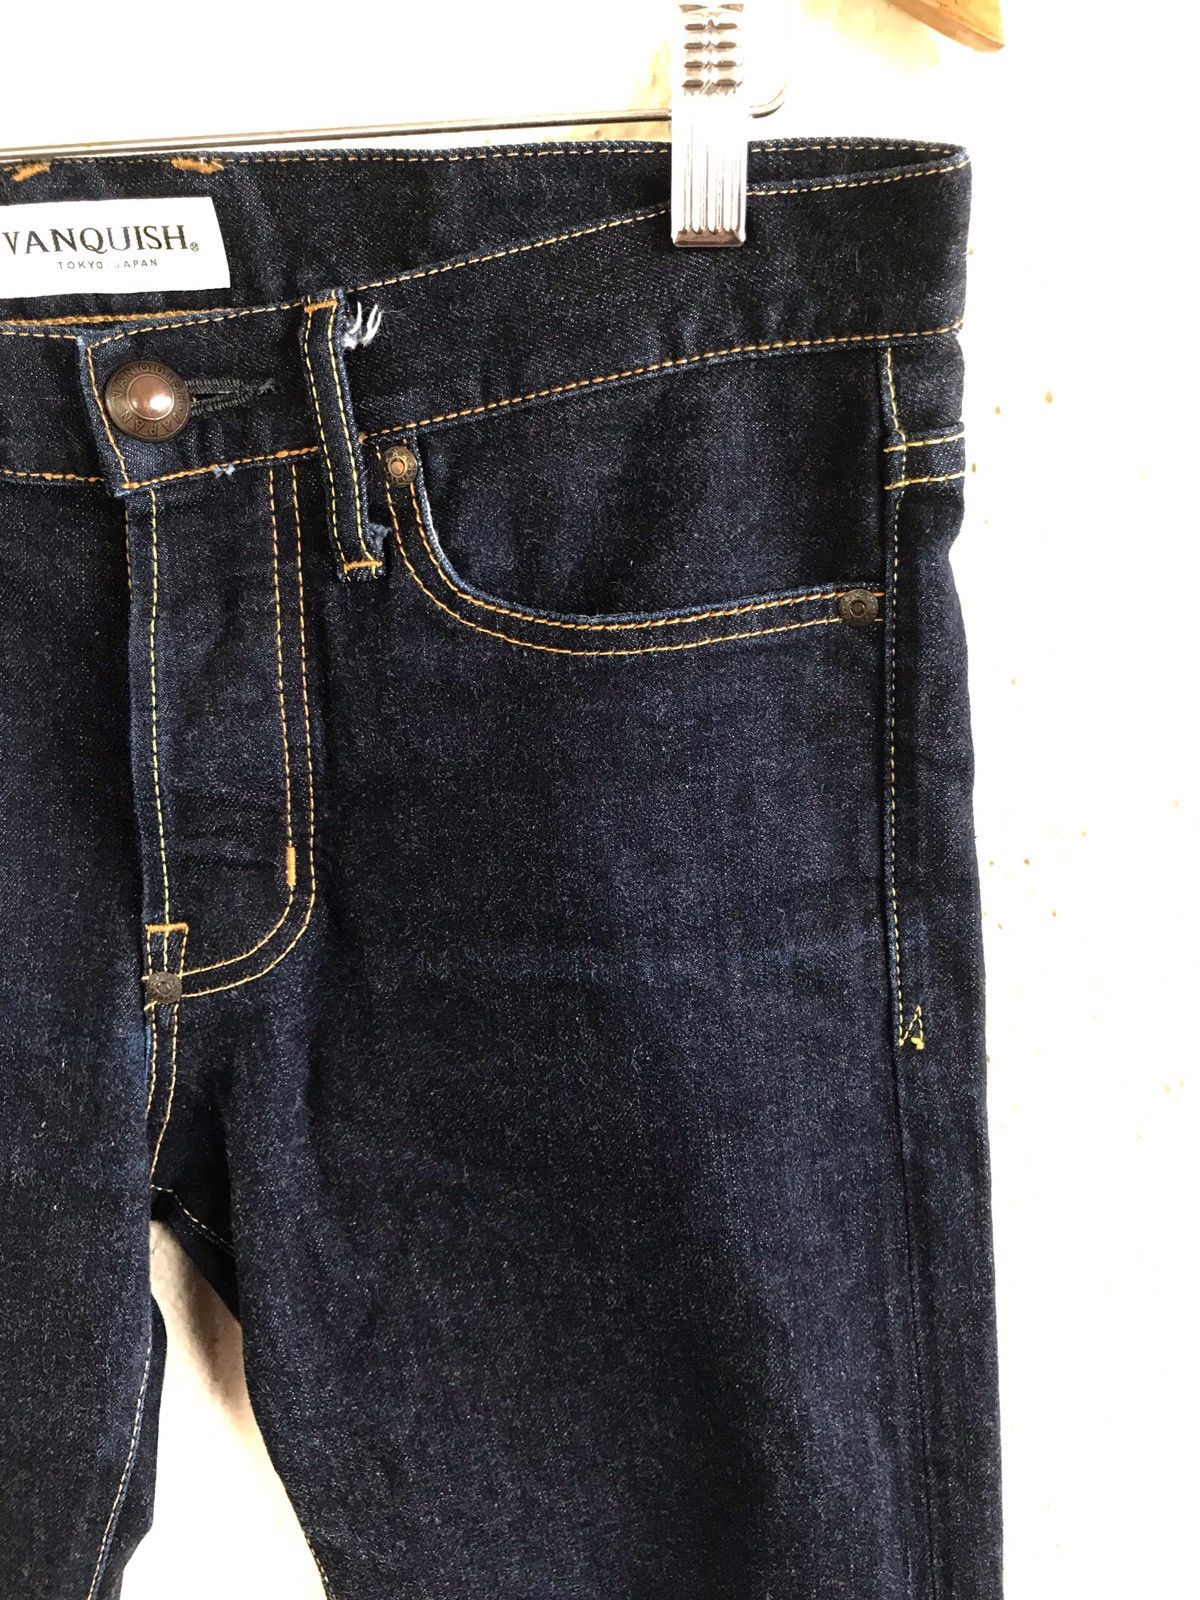 VANQUISH Japan Selvedge Skinny Jeans - 5